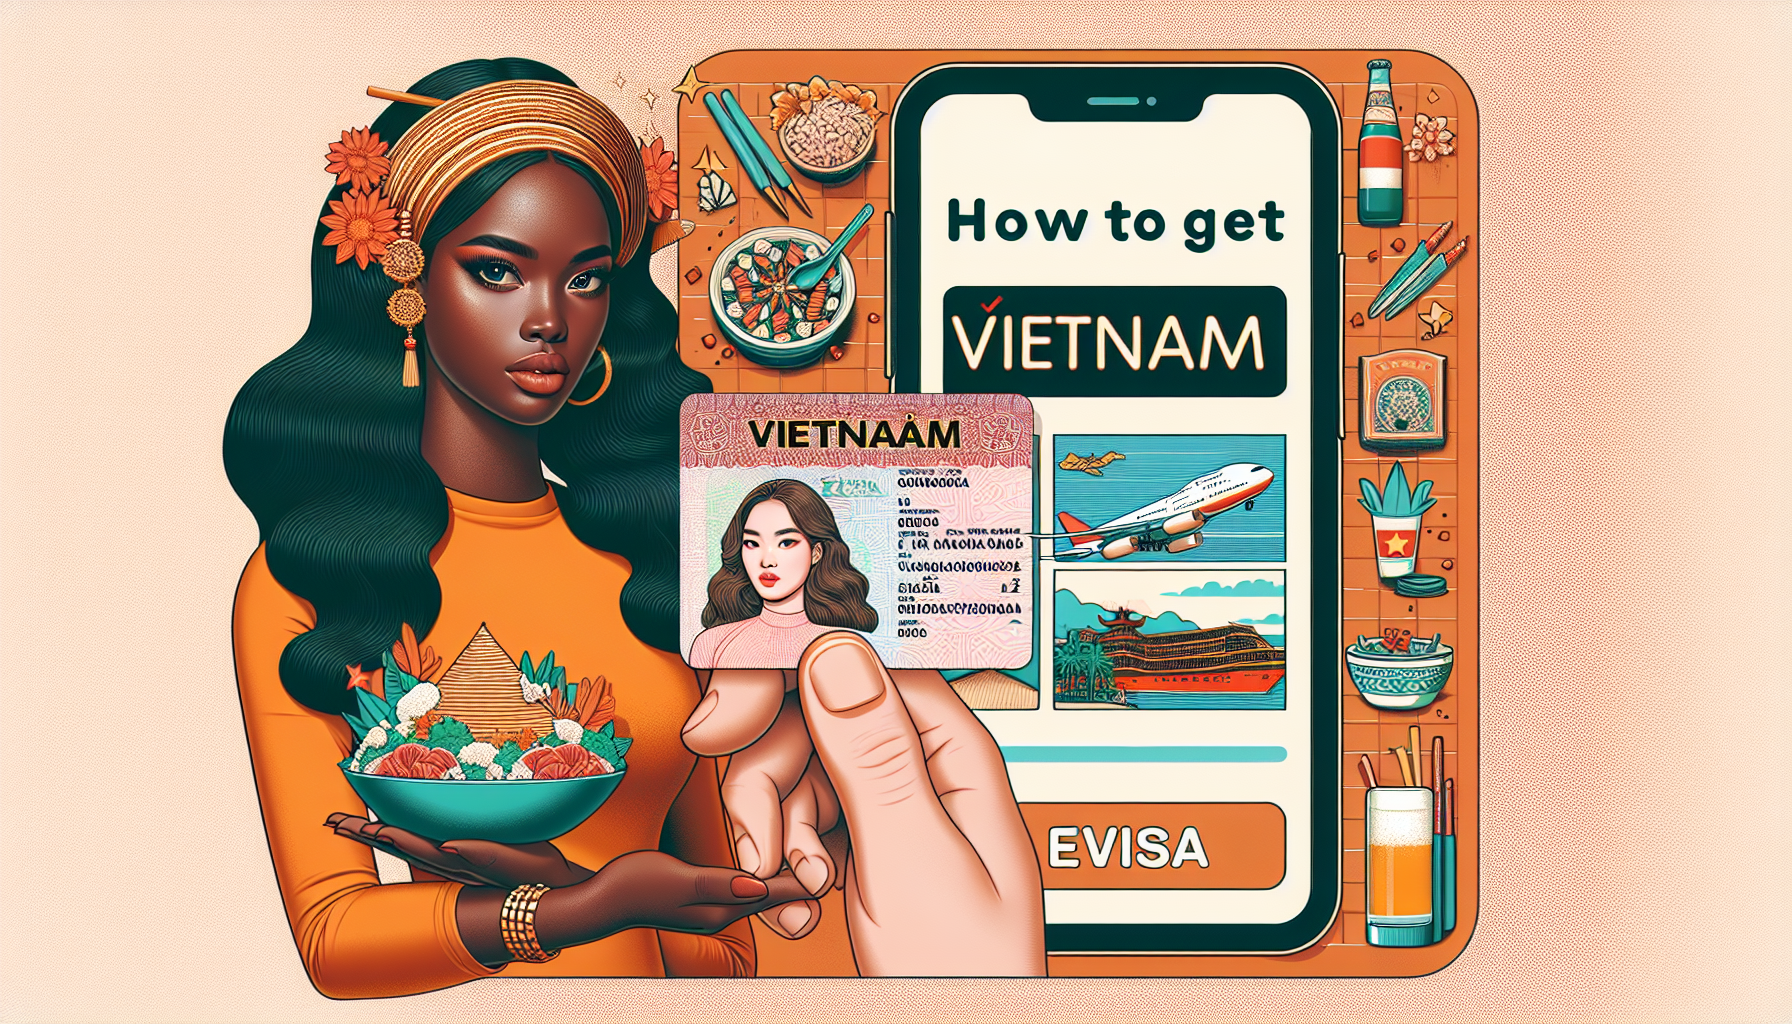 Vietnam Evisa for Citizens from Guyana